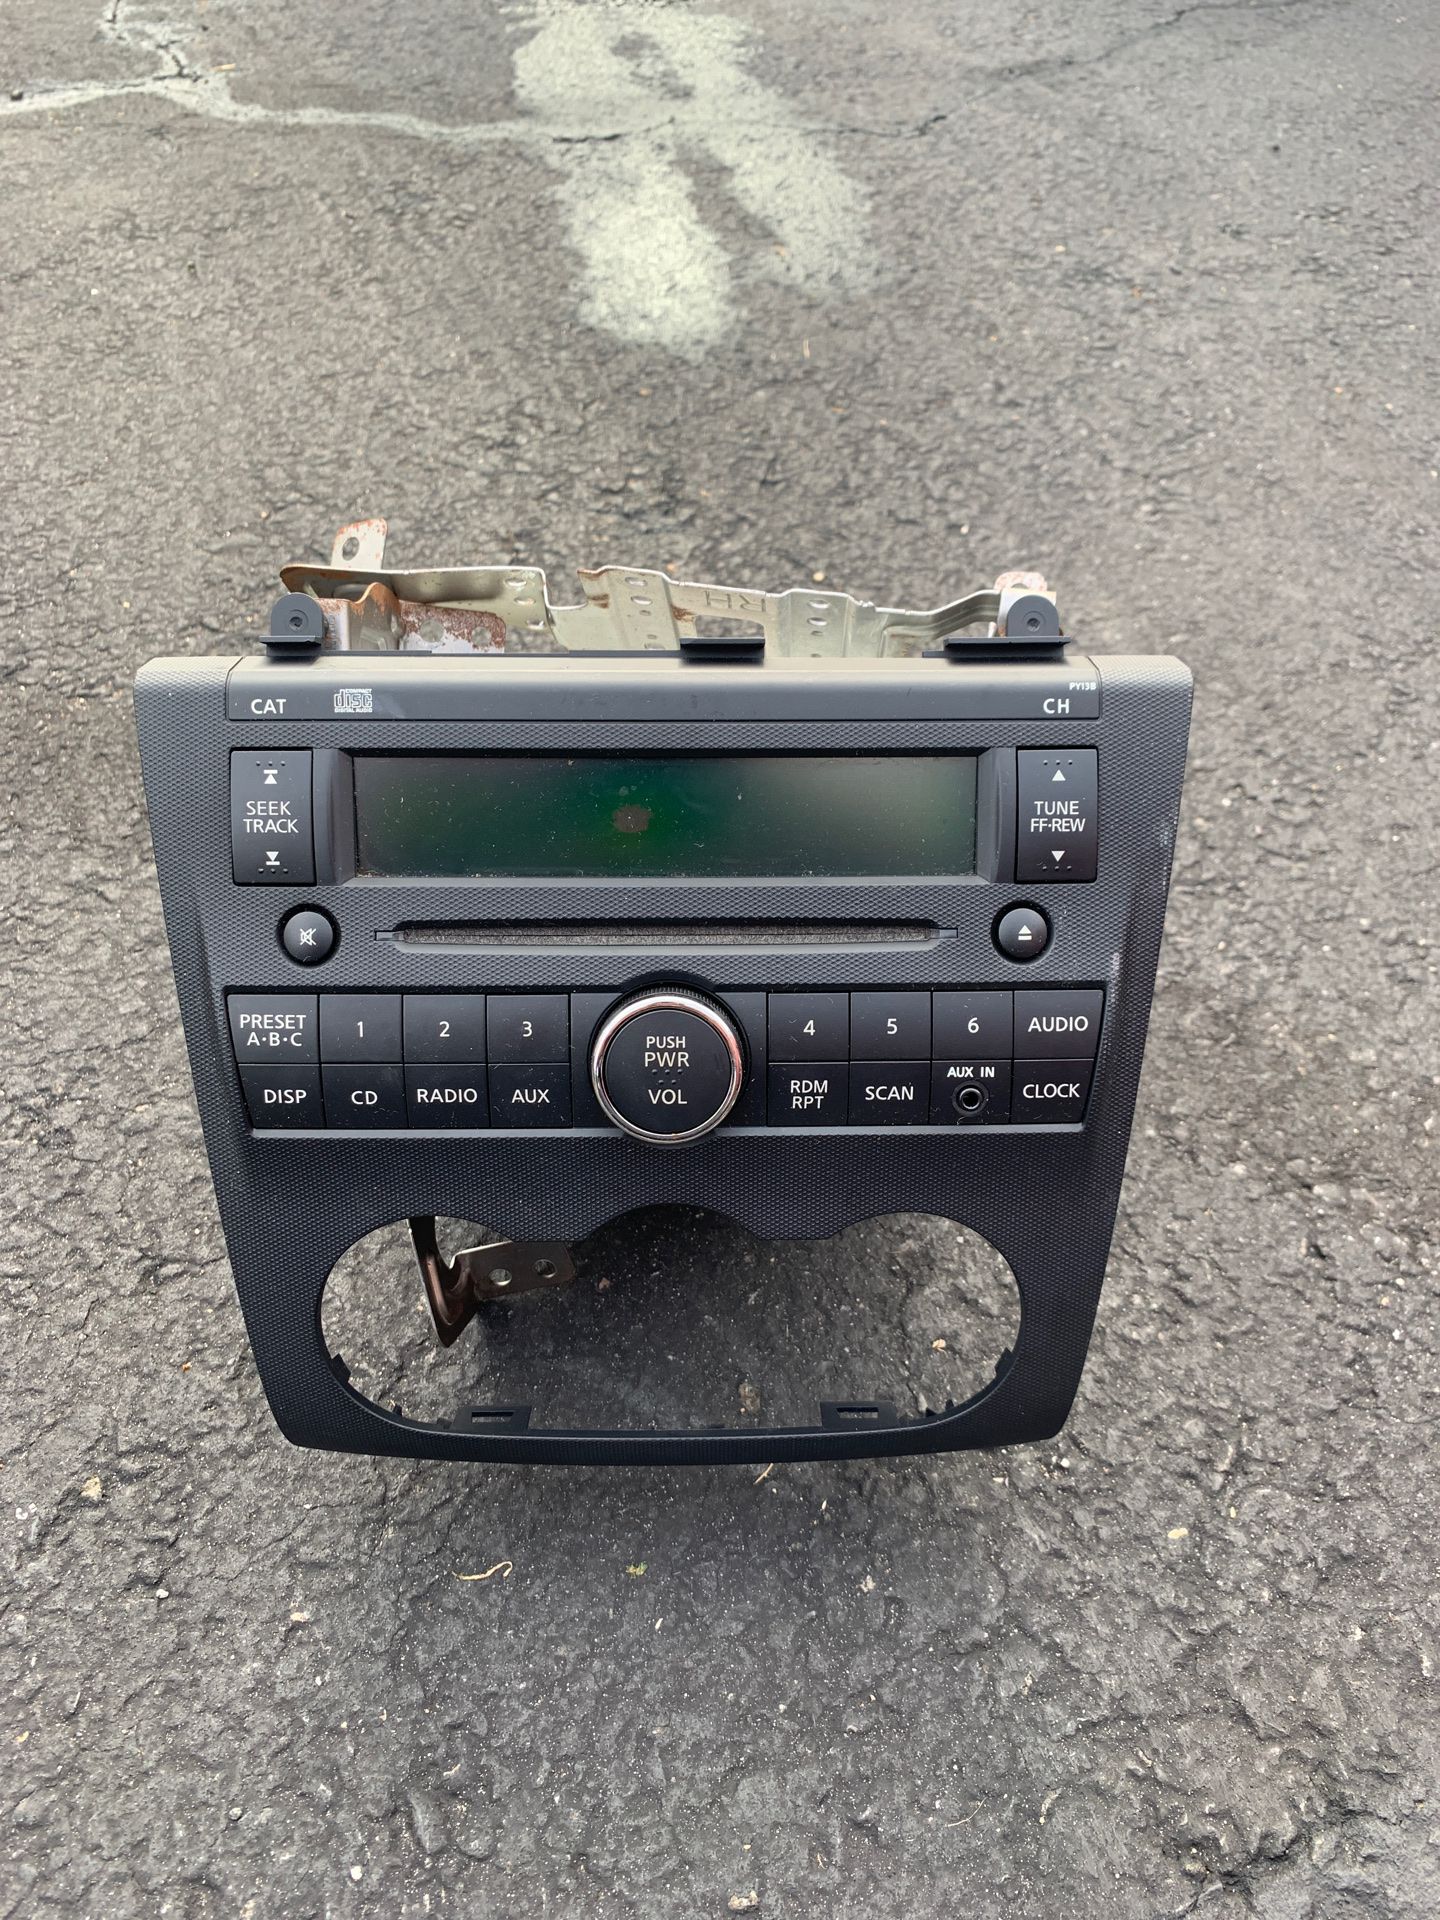 2009 Nissan CD and Radio player